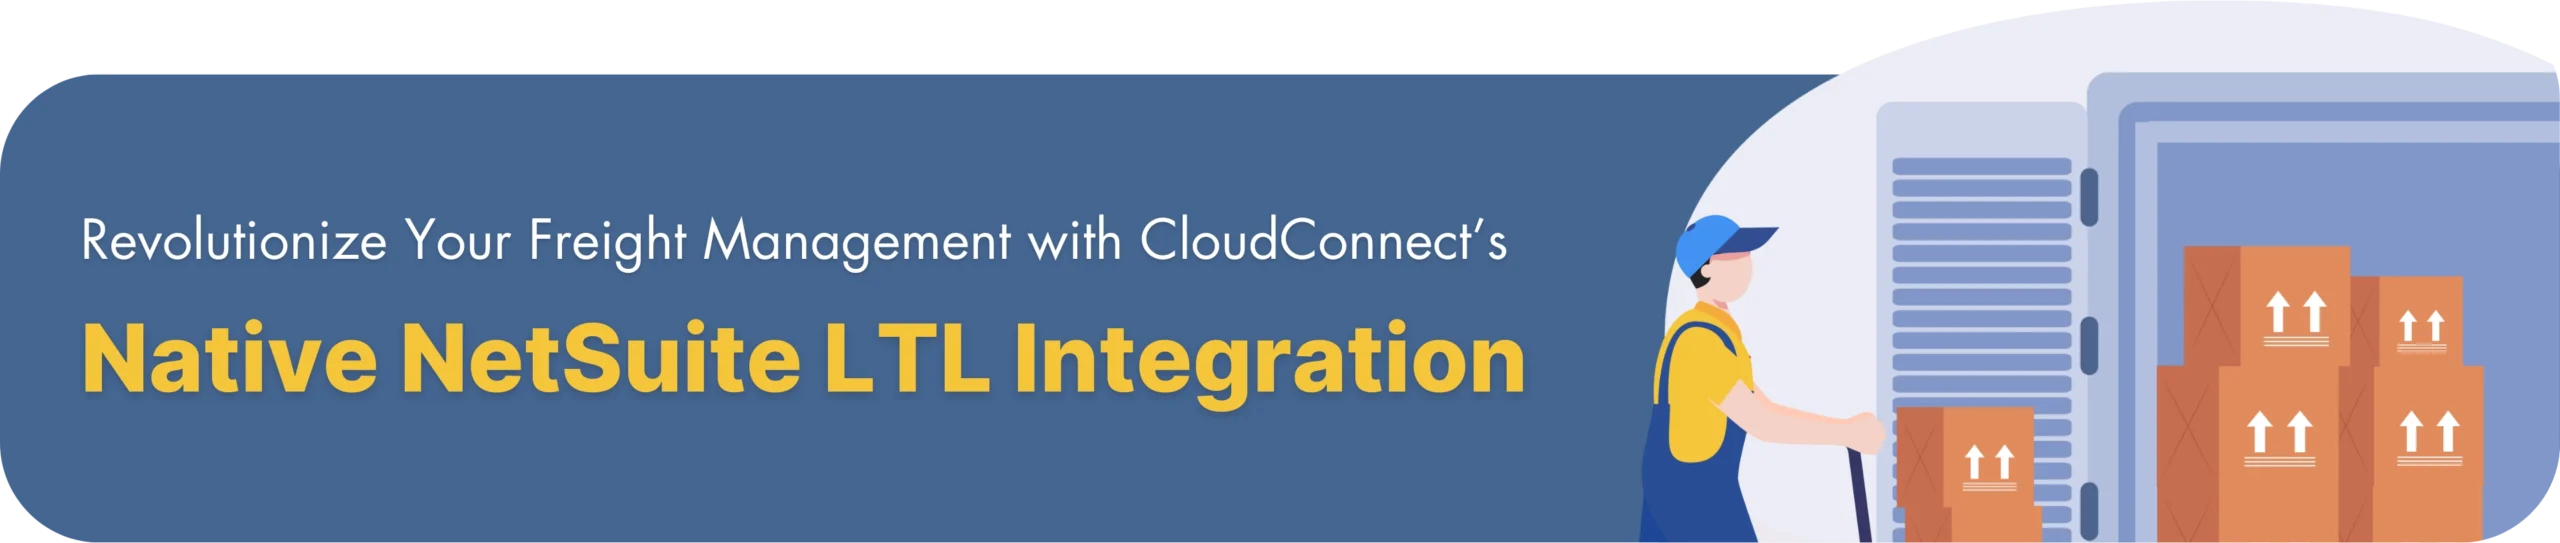 Revolutionize Your Freight Management with CloudConnect's Native NetSuite LTL Integration